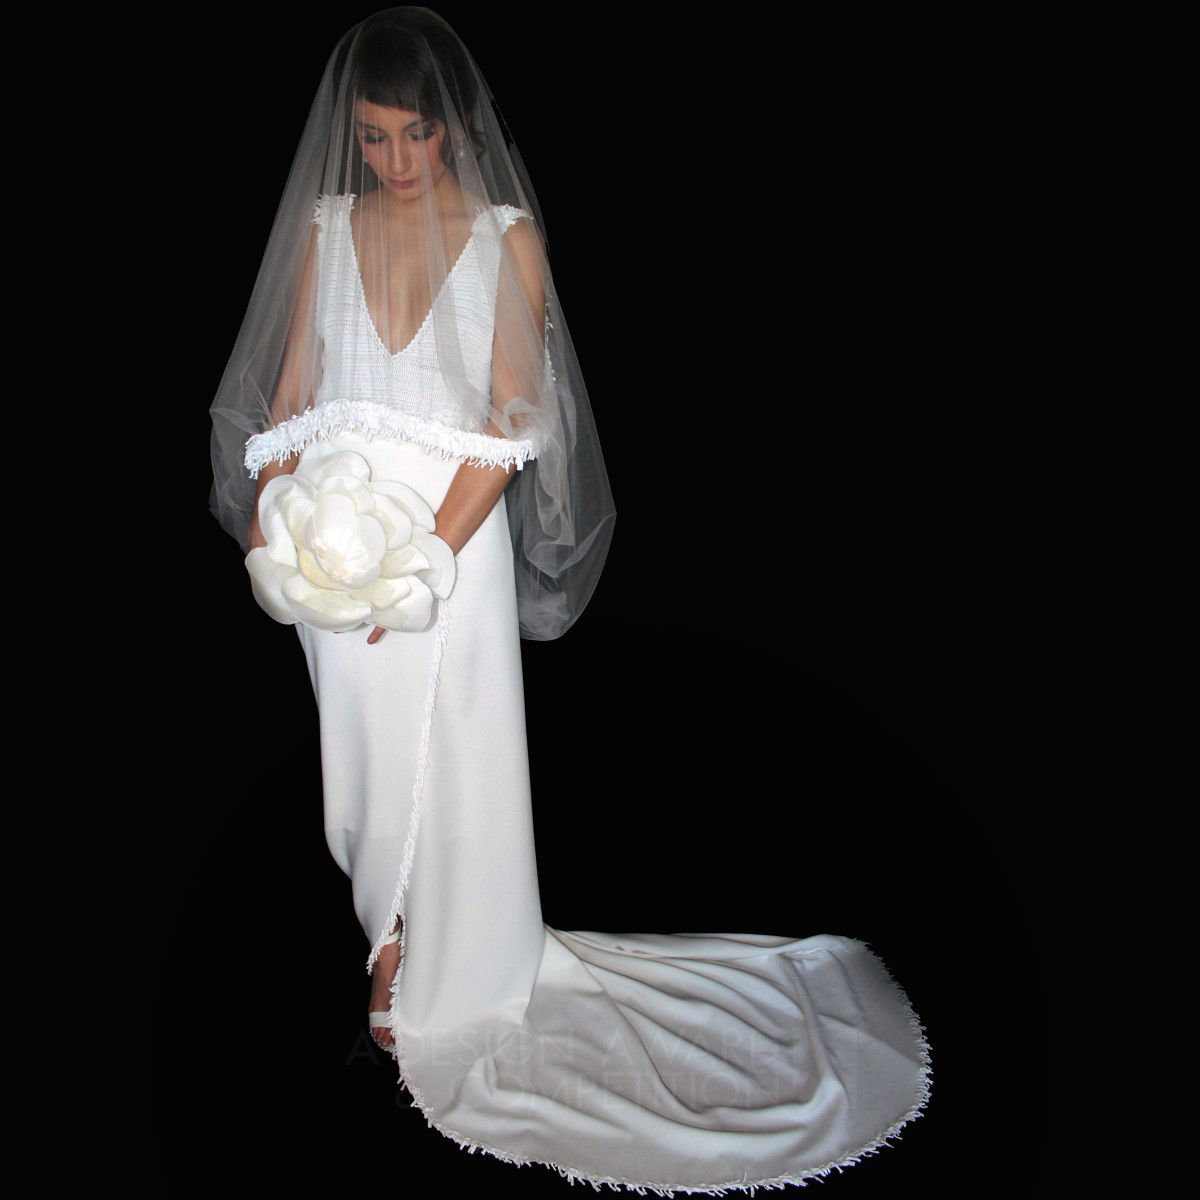 Cocodd Wedding dress by Ambra Castello